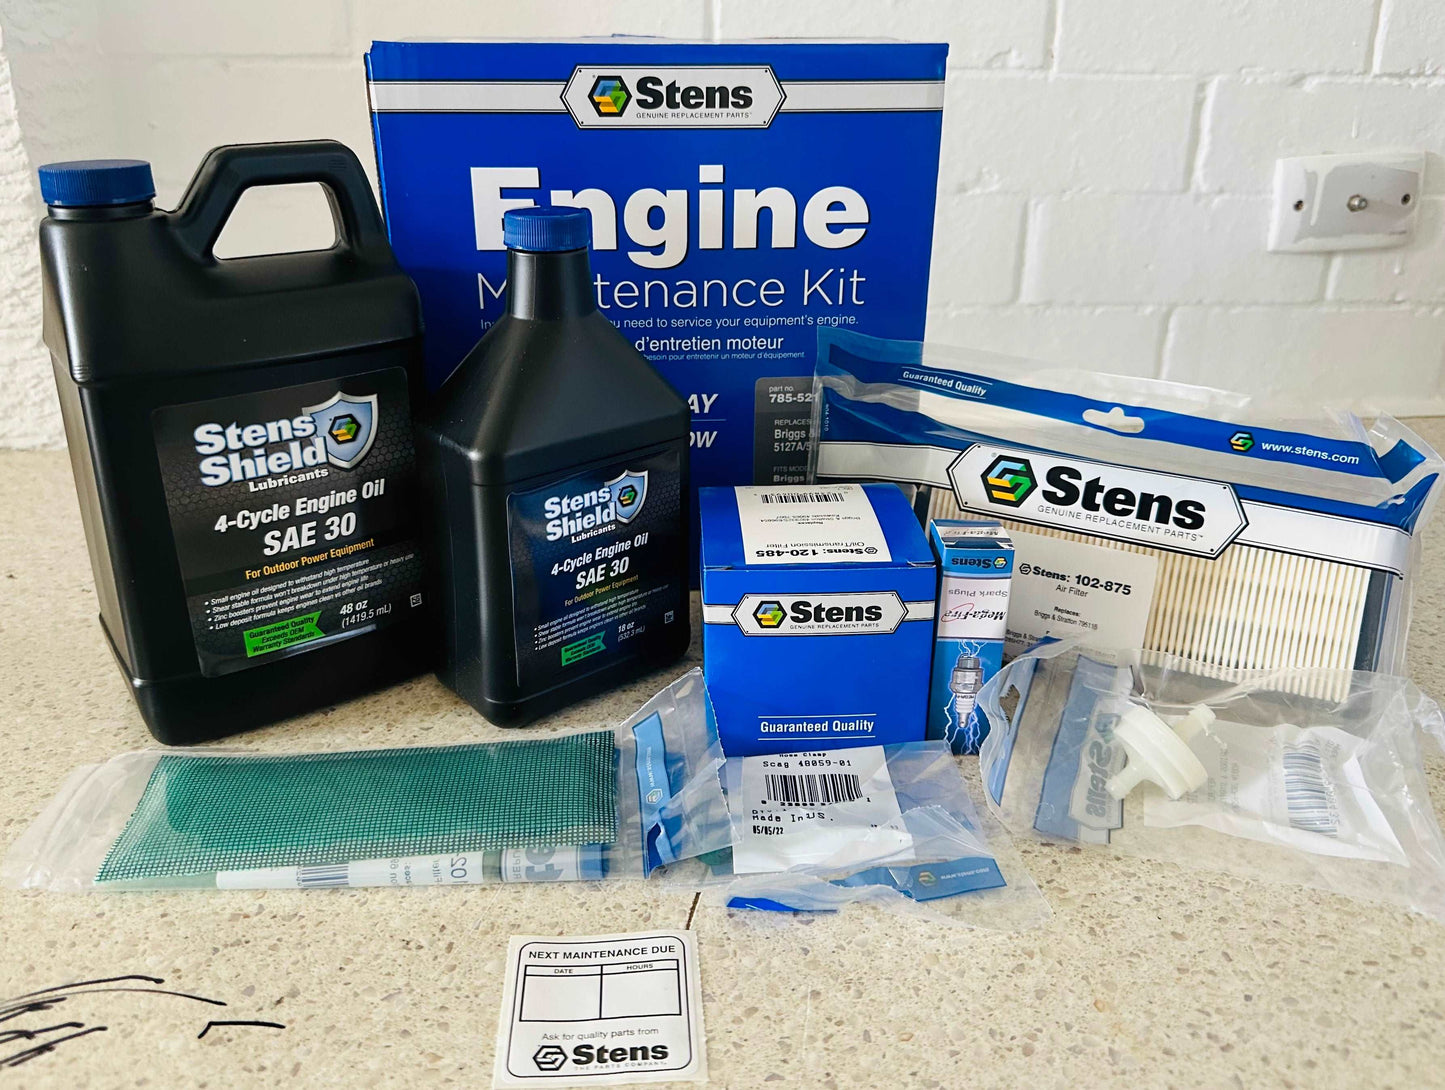 Stens Maintenance Kit for 15.5 17 17.5HP Briggs & Stratton Motors 492932S 698083